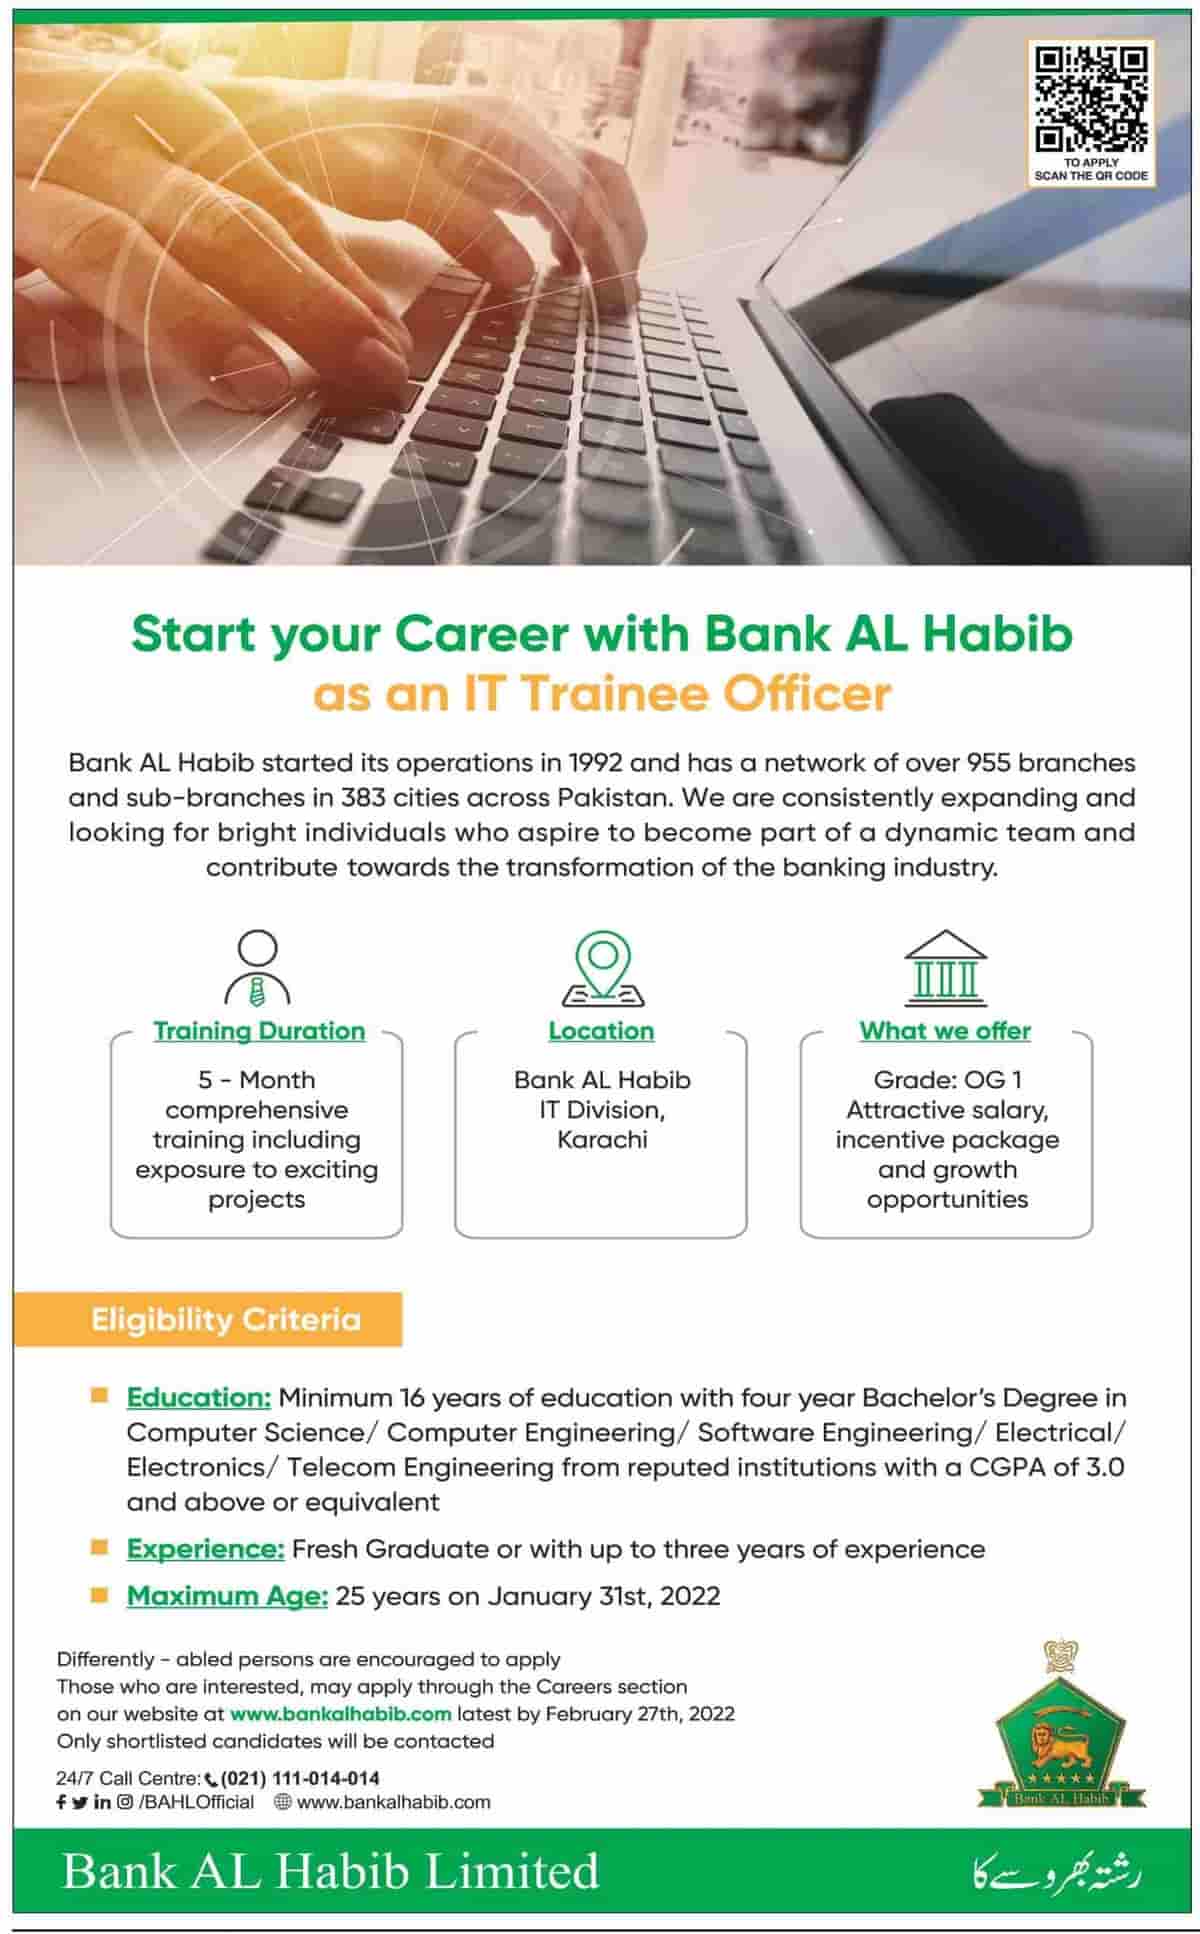 Jobs at Bank Al Habib Limited IT Trainee Officer Jobs 2022